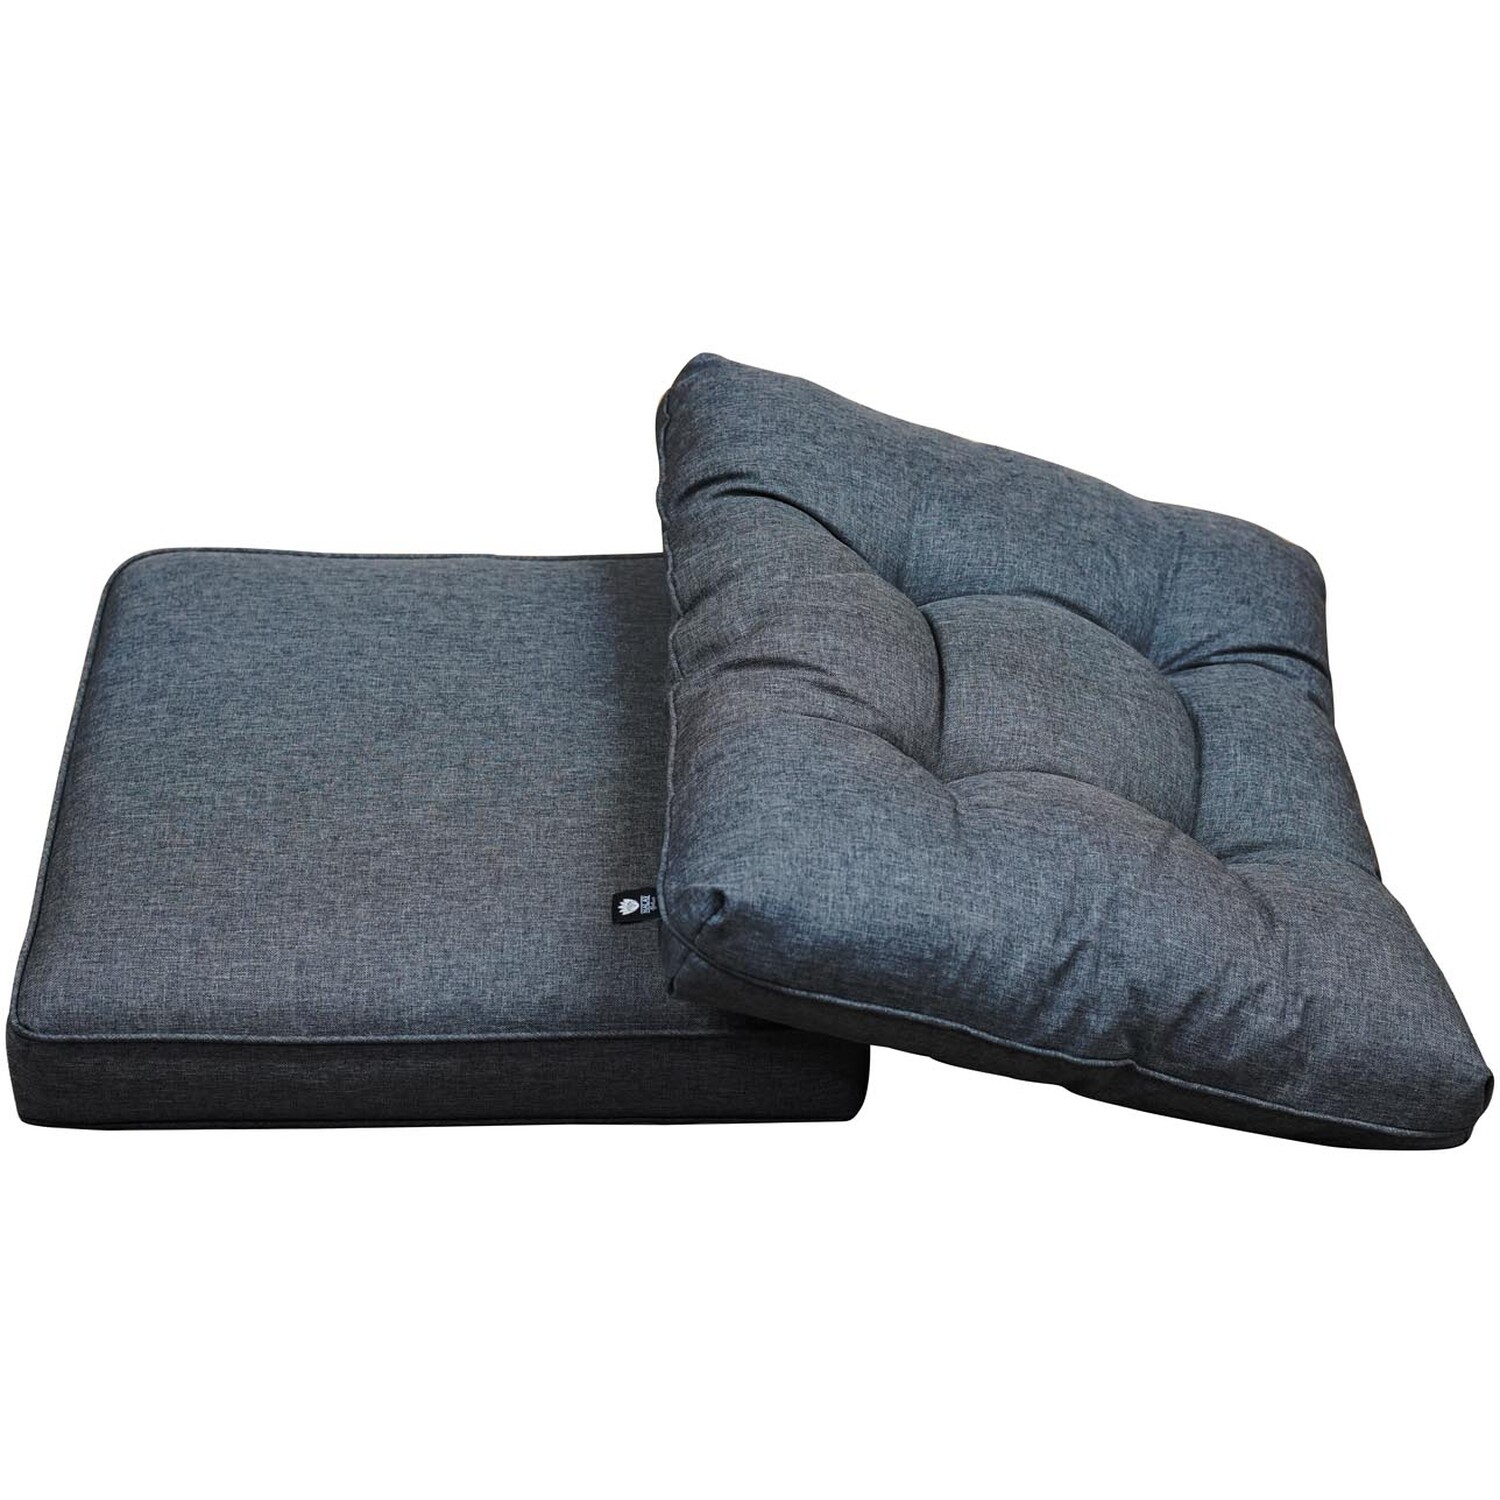 Malay Deluxe Cambridge Cushions - Grey Image 1